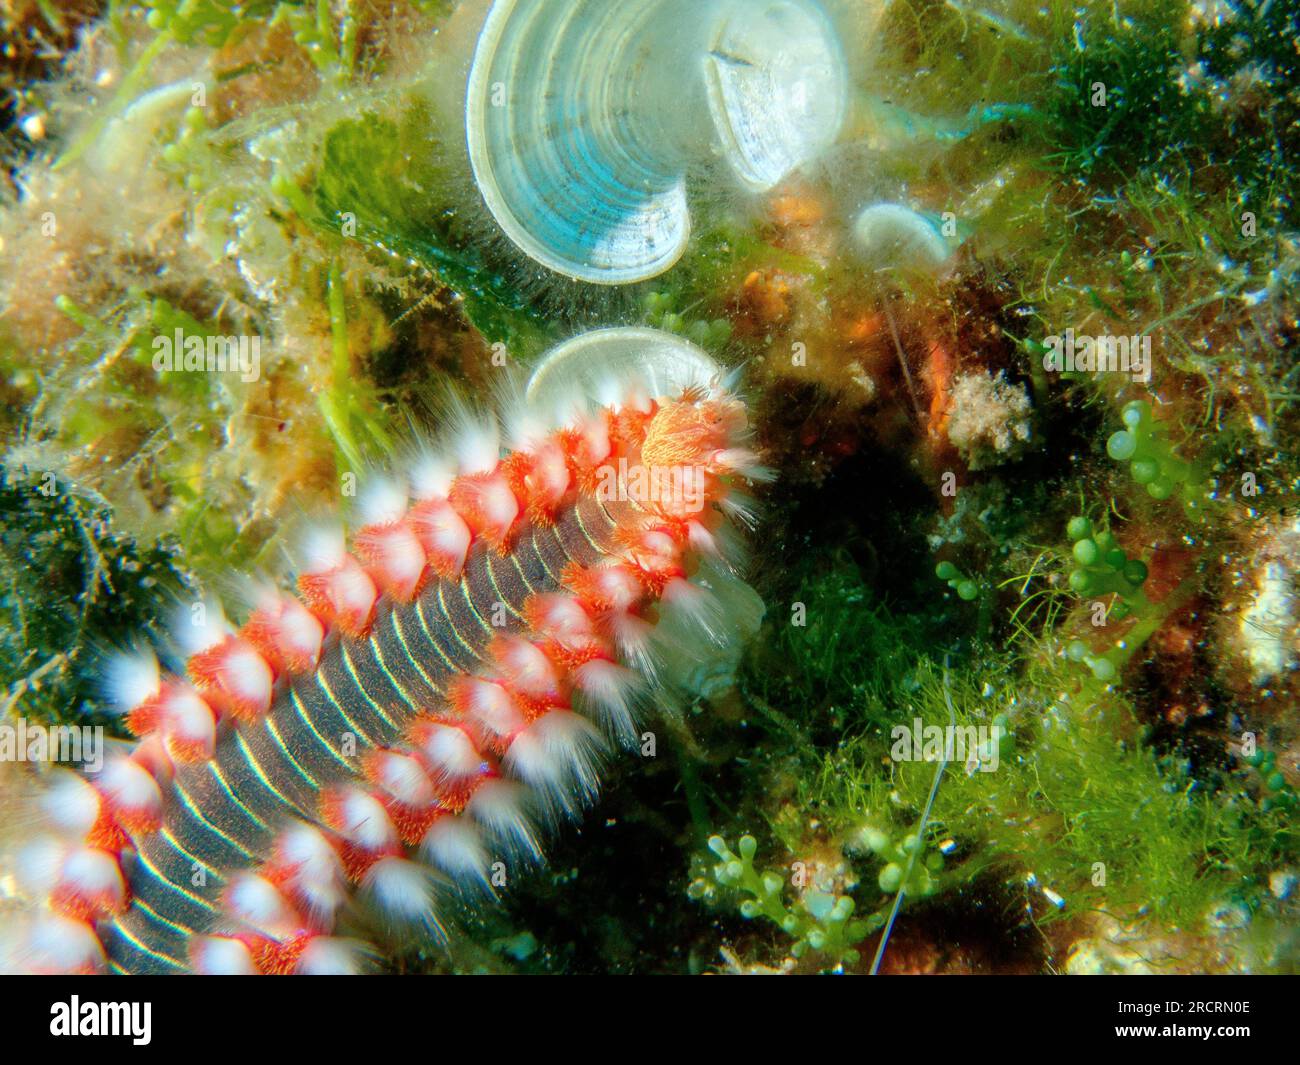 Bearded fireworm - Hermodice carunculata - marine bristleworm Stock Photo